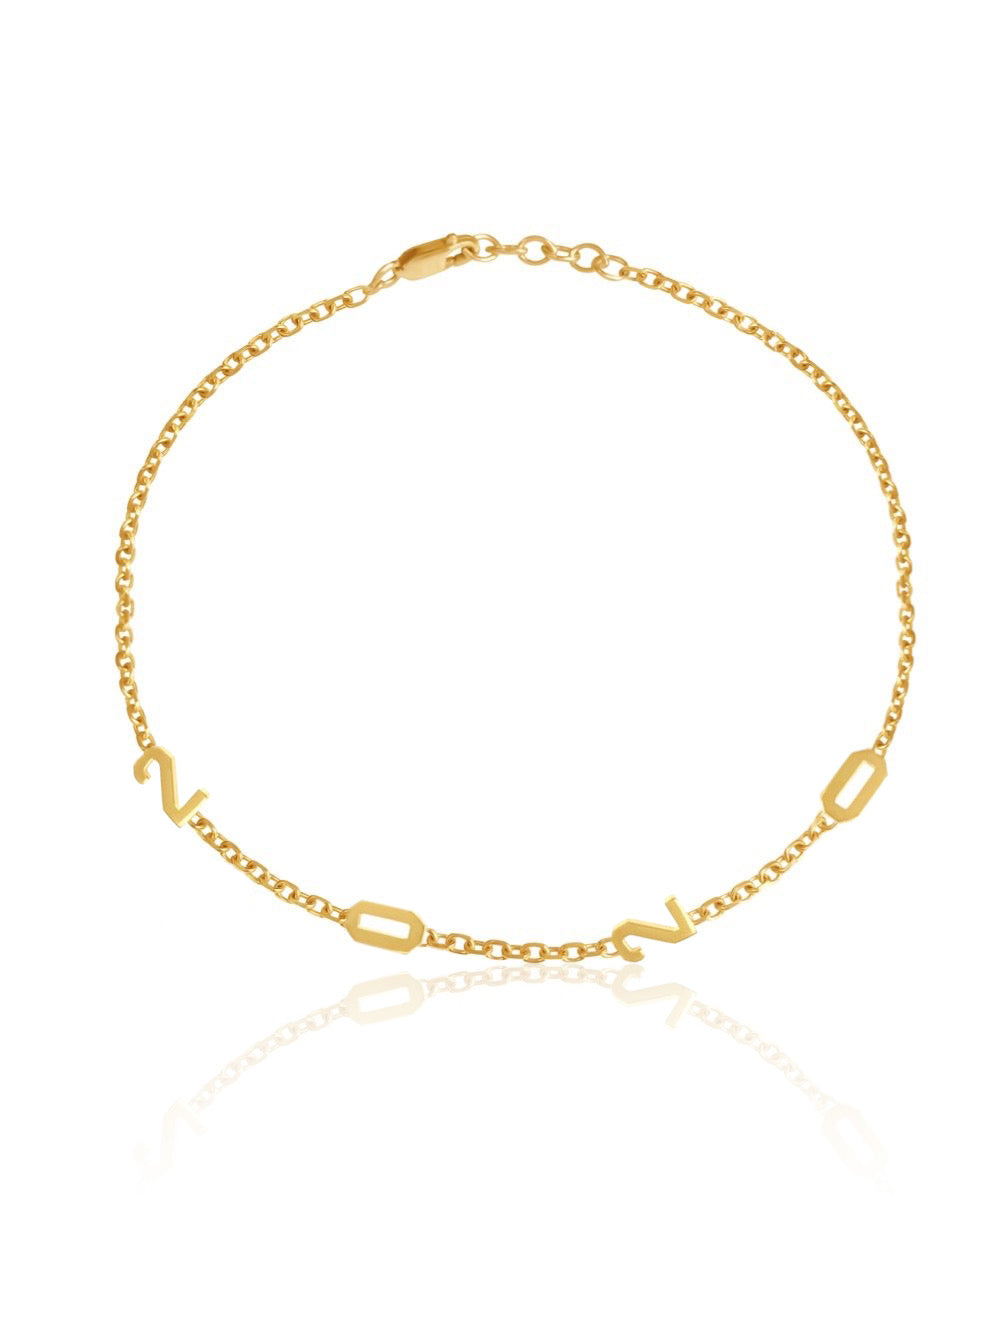  14k Gold Initial Bracelet 14k Solid Gold Personalized Bracelet  : Handmade Products